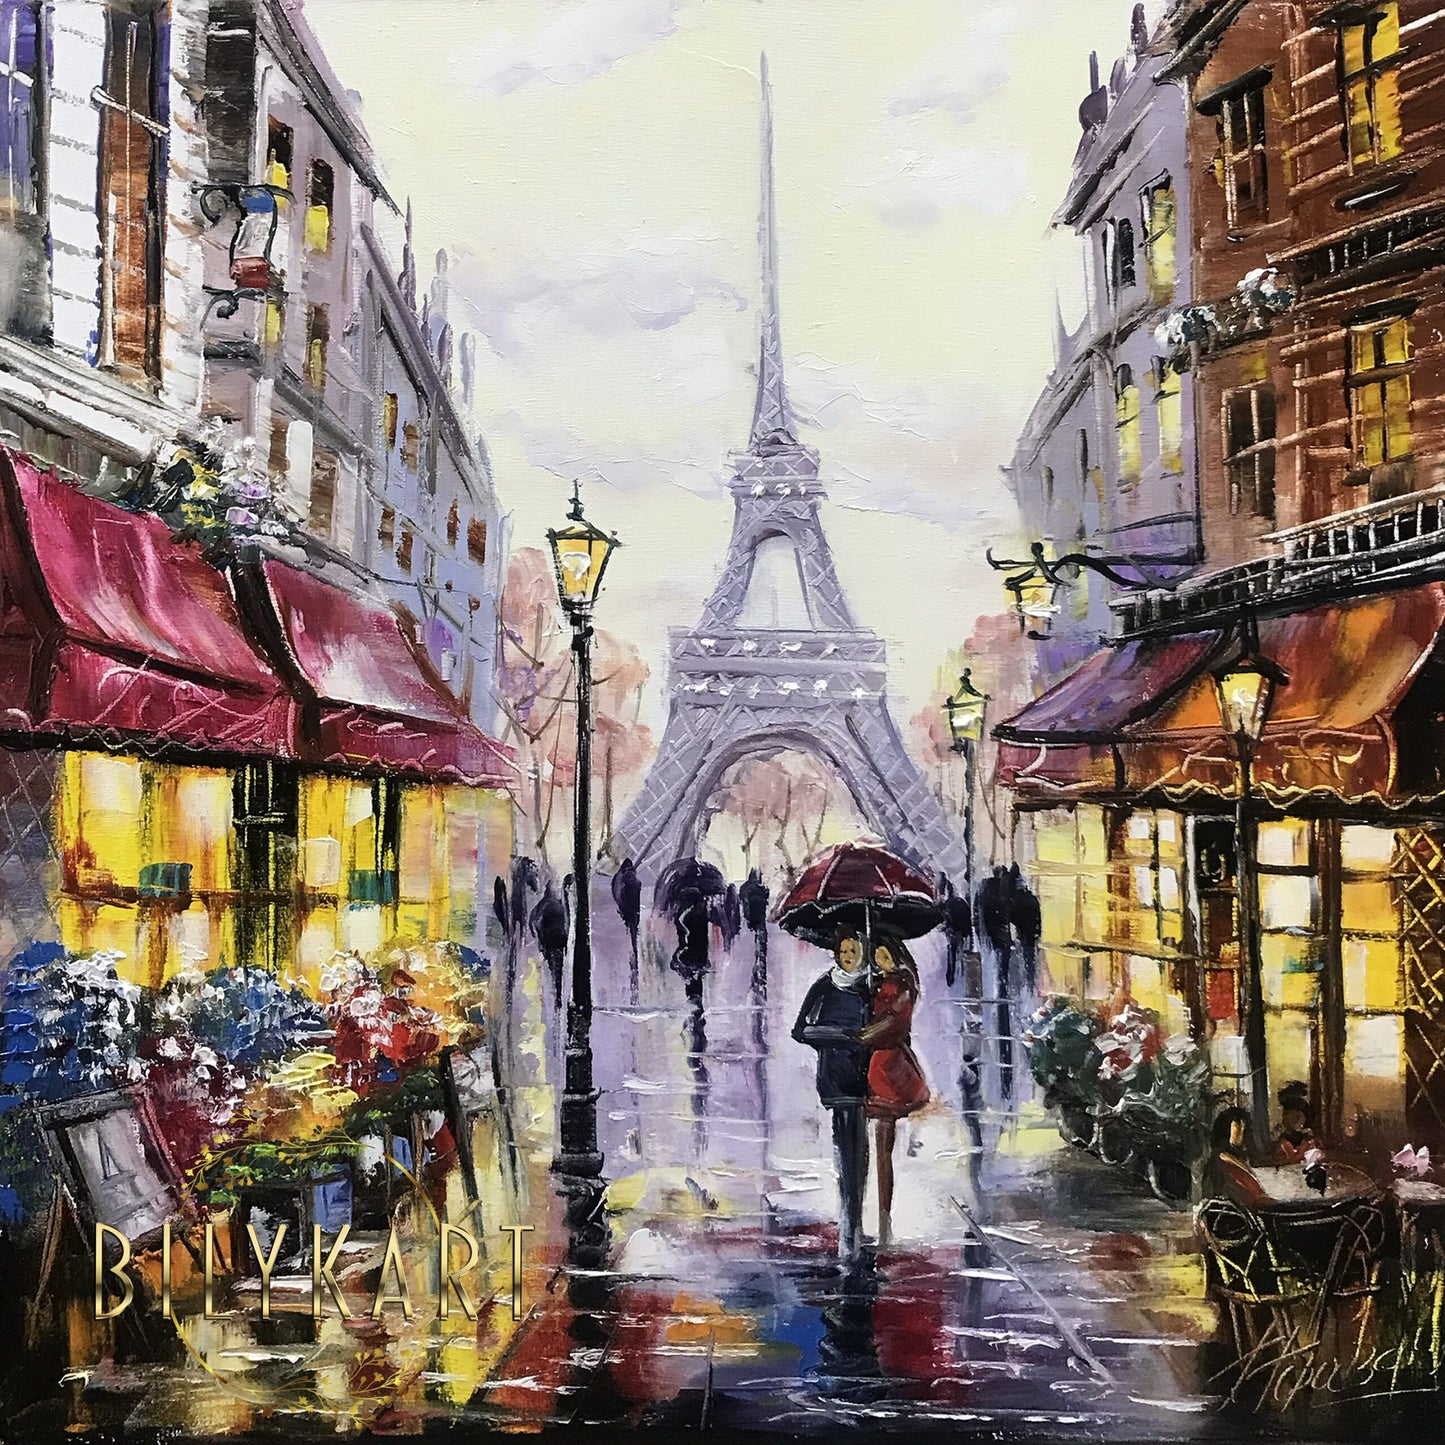 Rainy Day in Paris Painting on Canvas Big Paris Wall Art Parisian Cafe Painting Original Large Parisian Street Scene Oil Painting